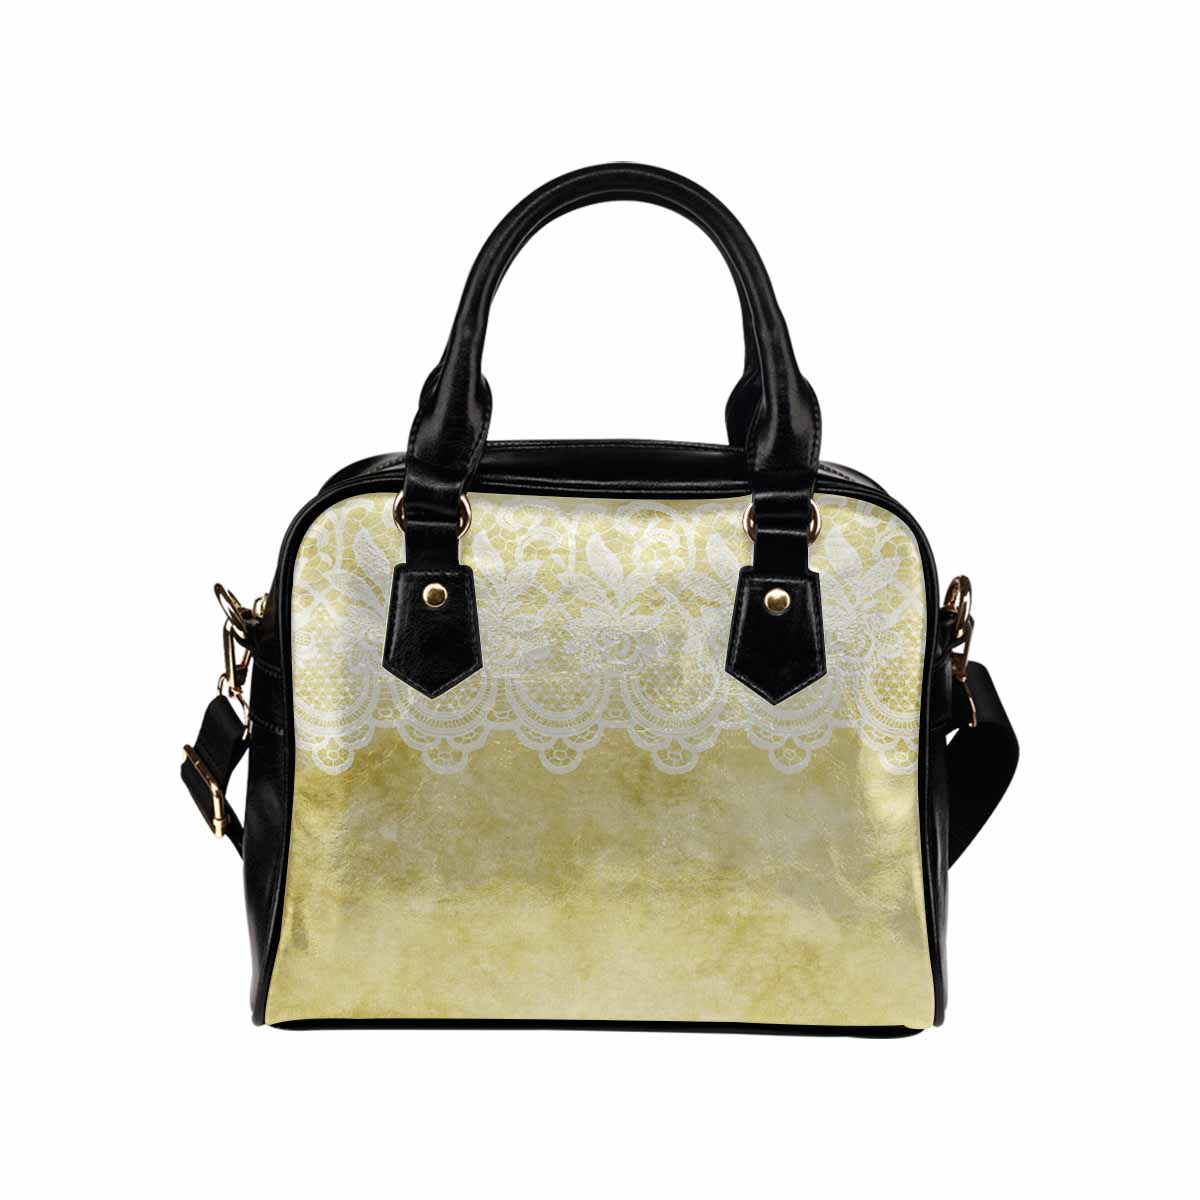 Victorian lace print, cute handbag, Mod 19163453, design 44